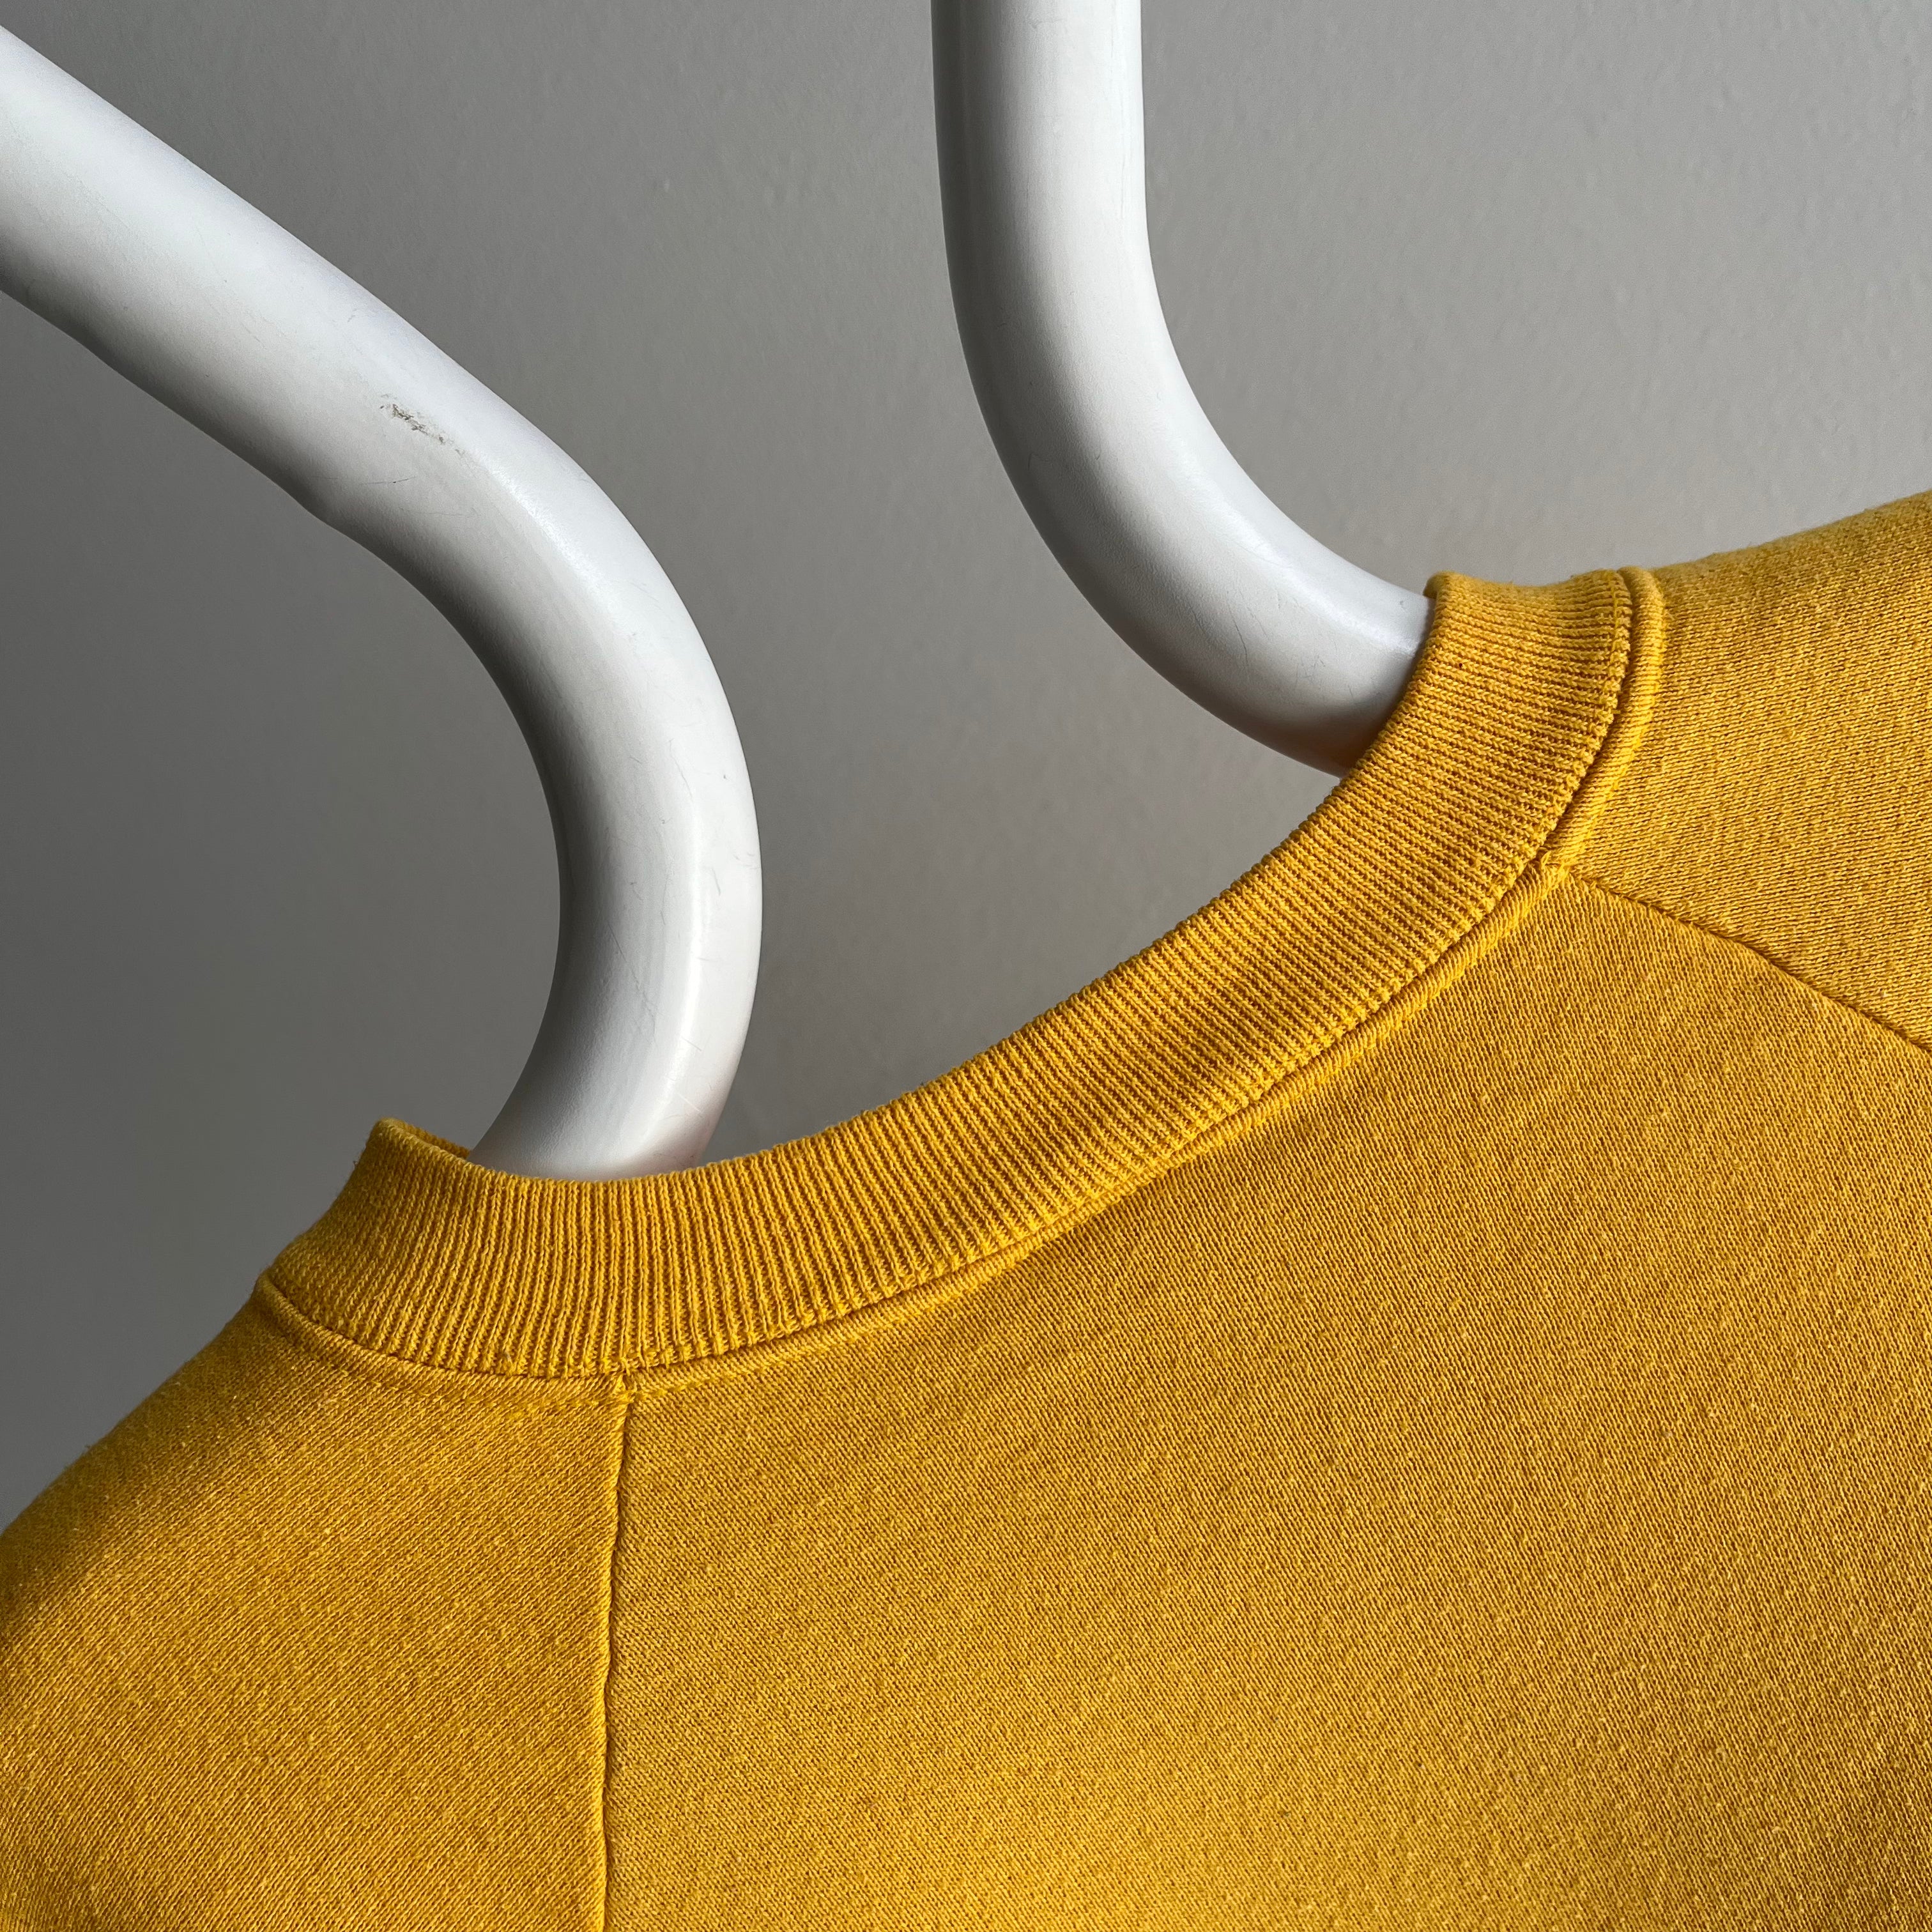 1980s FOTL Mustard/Marigold Blank Sweatshirt